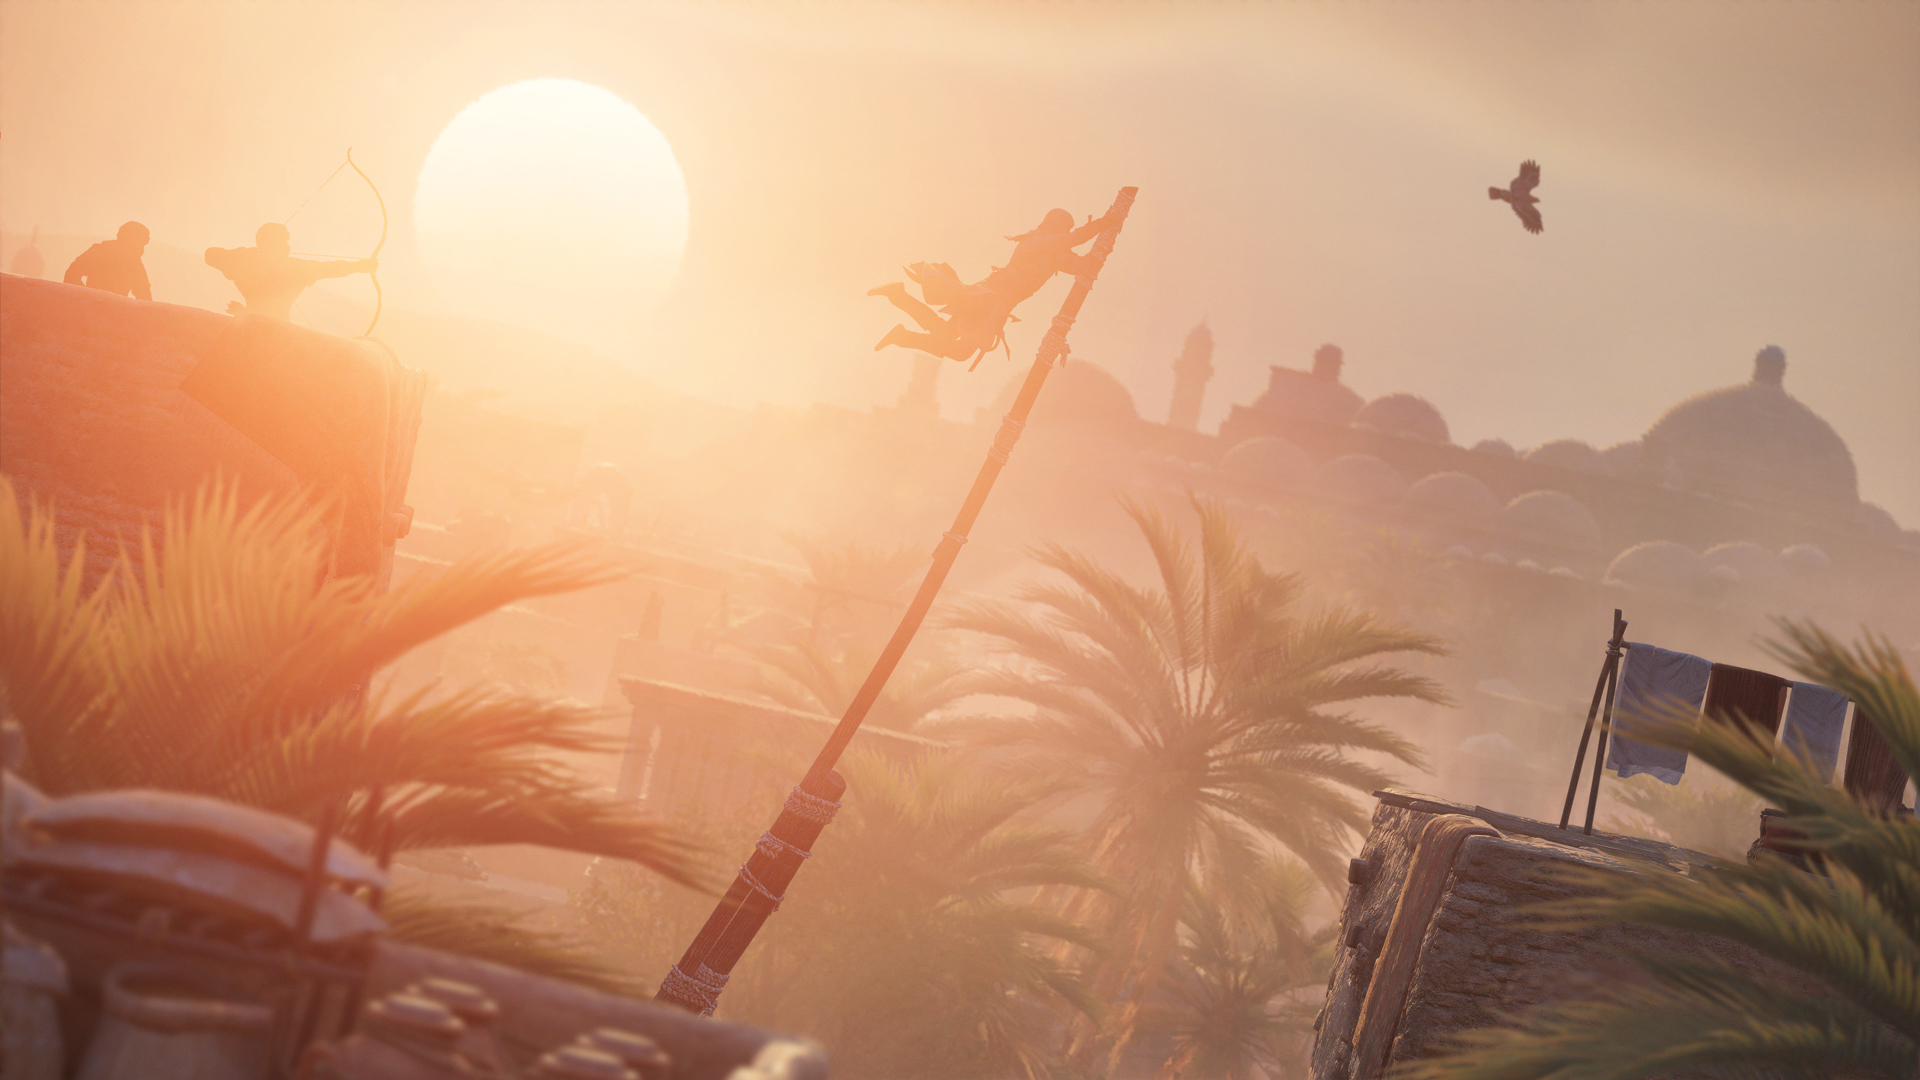 Assassin's Creed Mirage screenshots